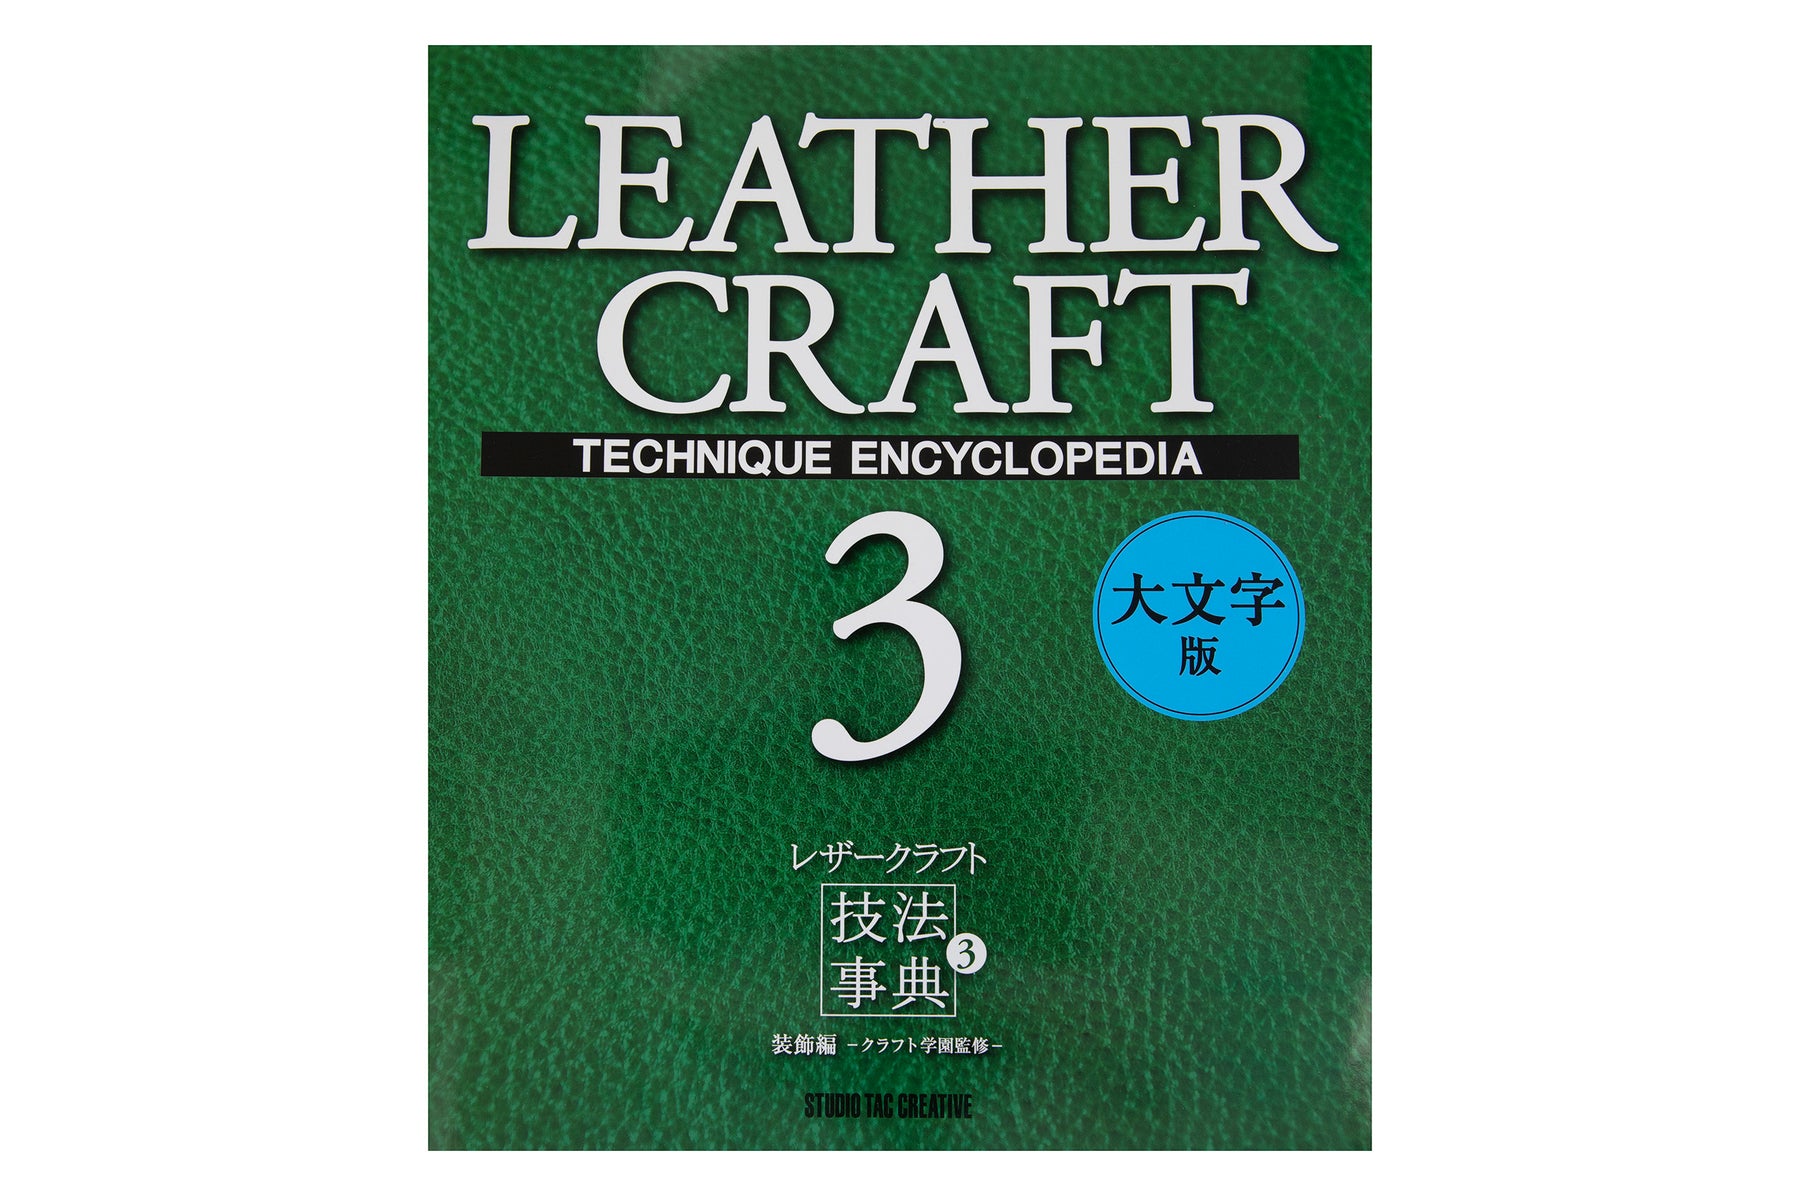 Studio Tac - Leathercraft Technique Encyclopedia #3 - (#8322)